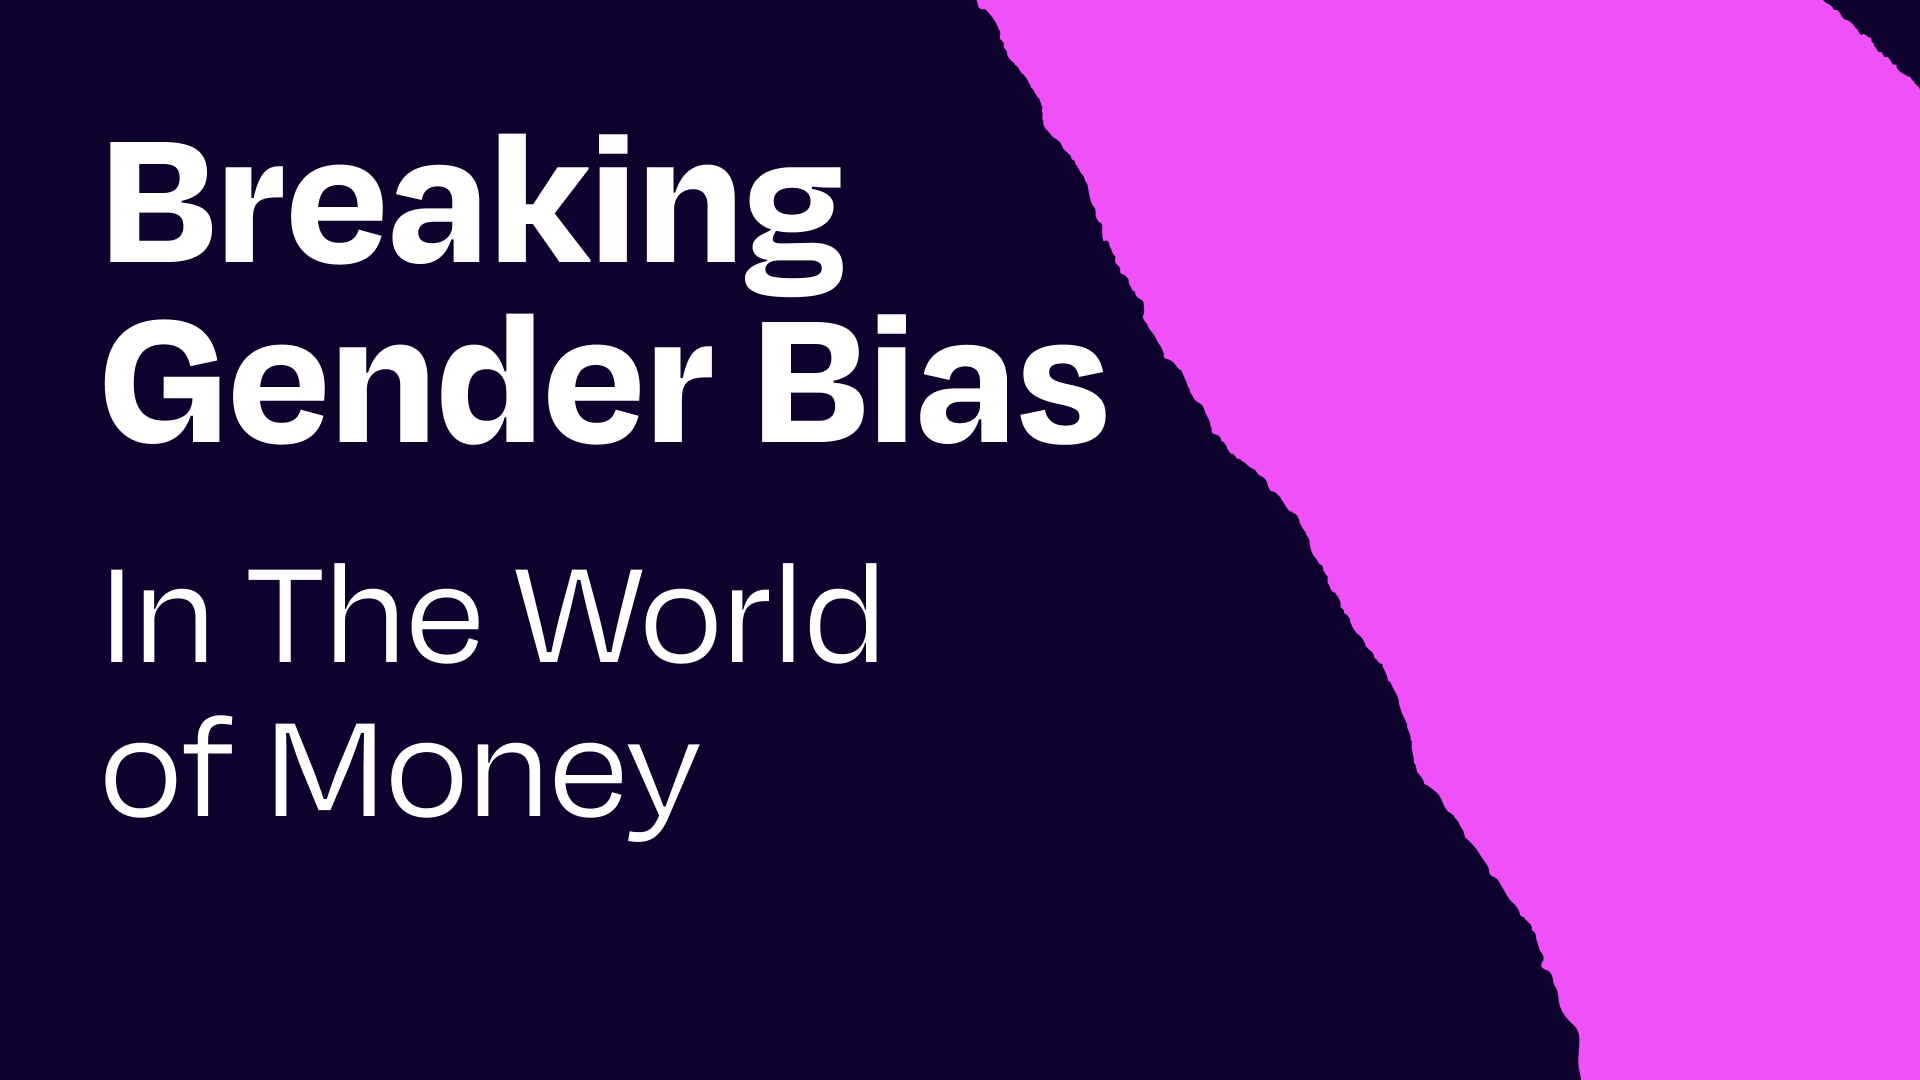 Three ways to break the gender bias in the world of money